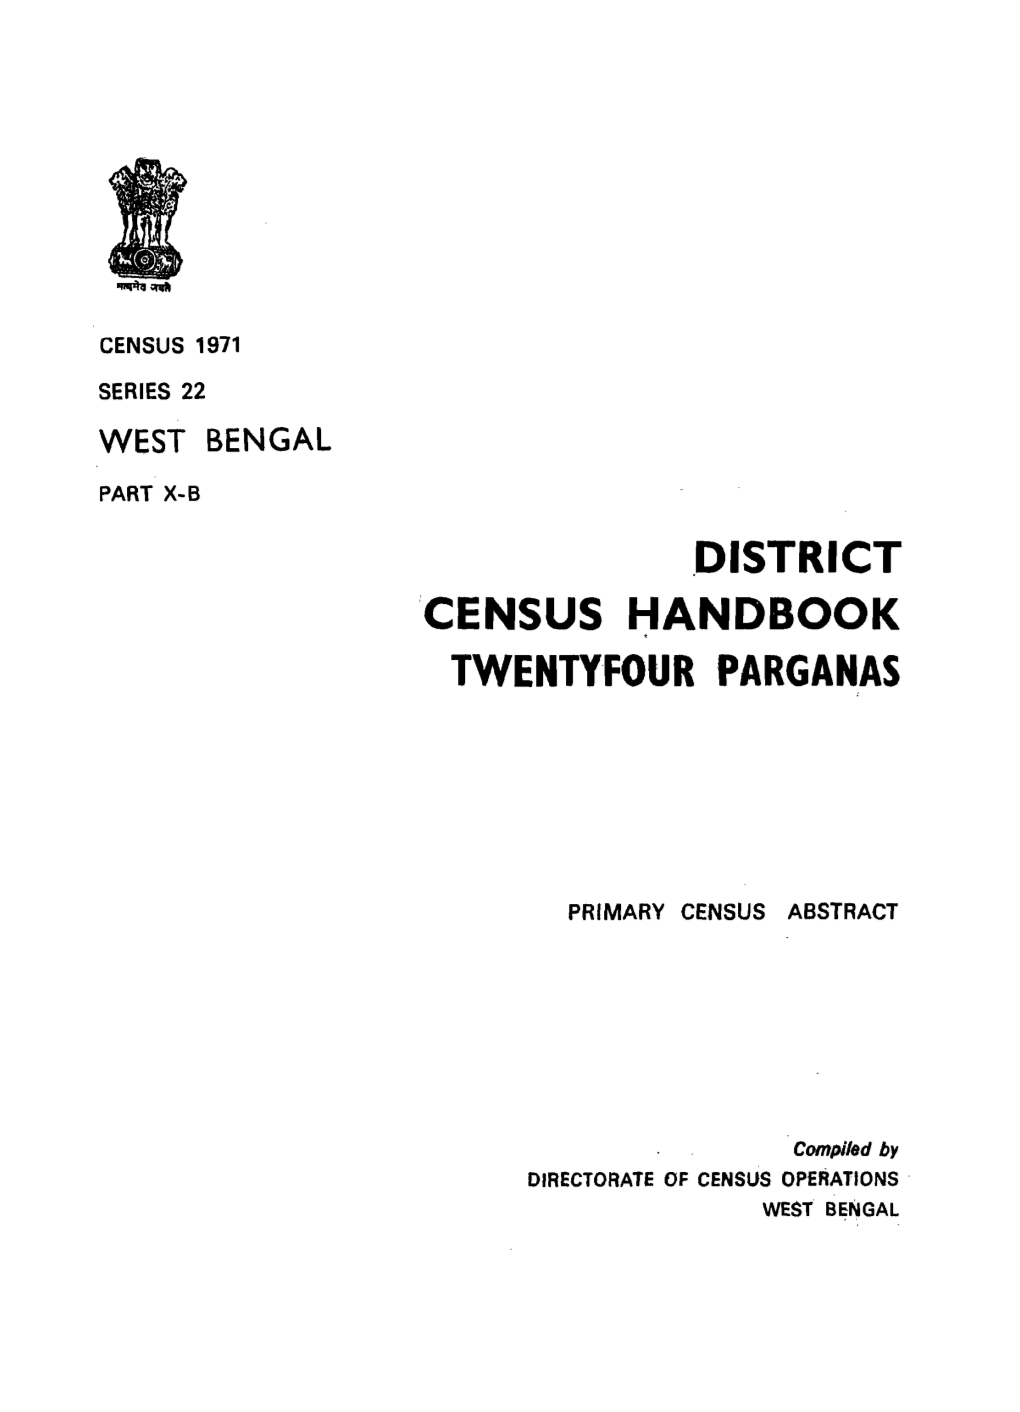 Primary Census Abstract, Twentyfour Parganas, Part X-B, Series-22